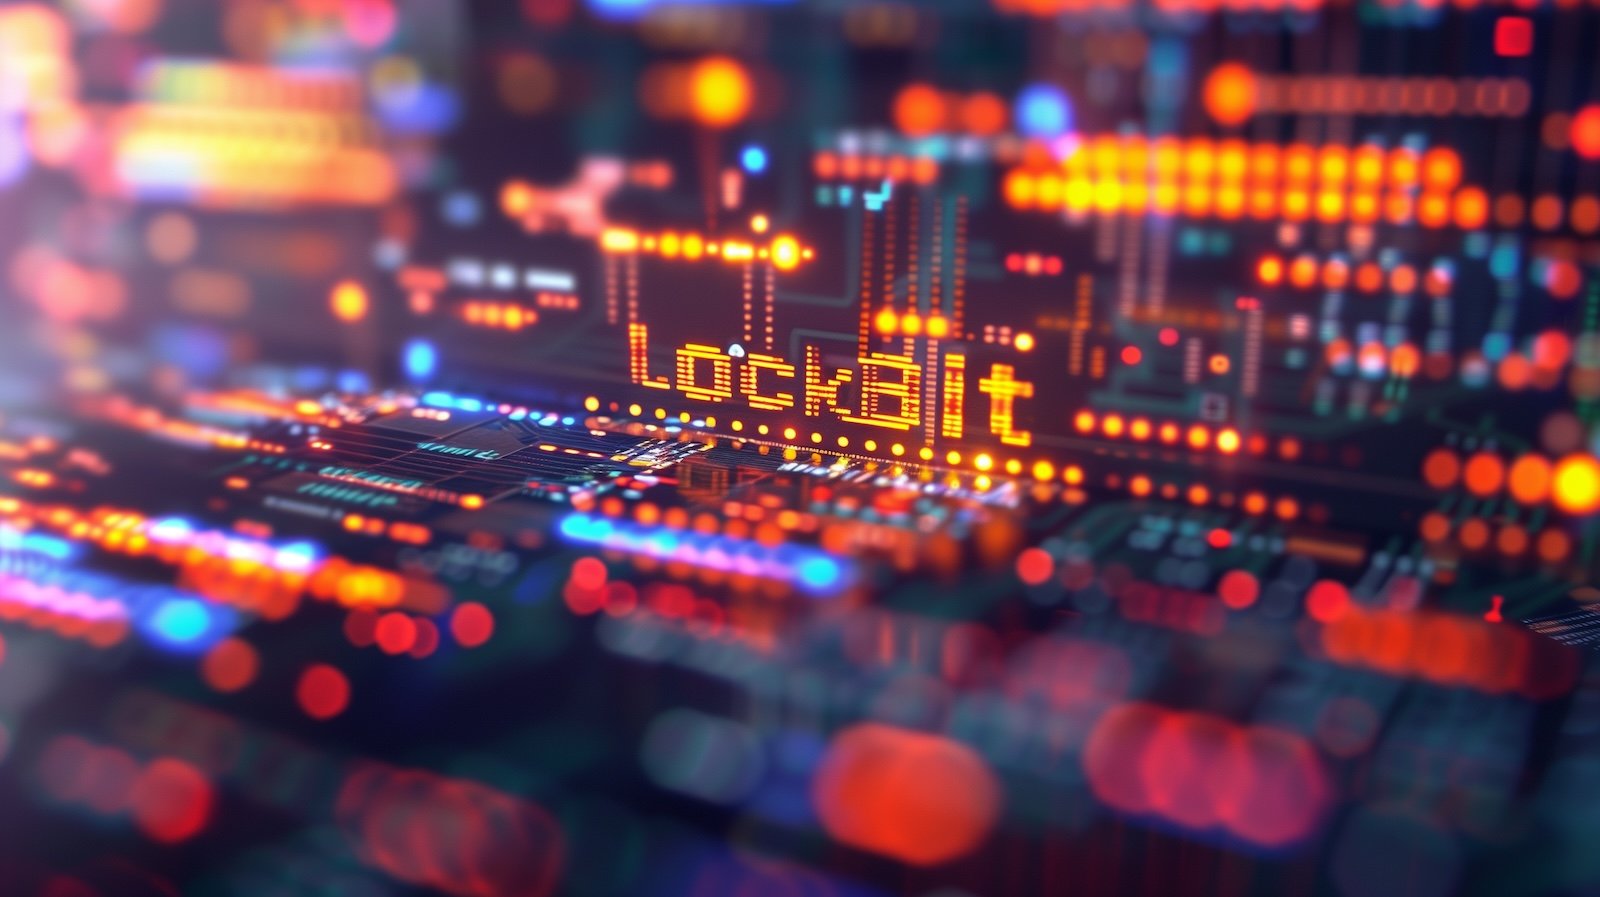 LockBit ransomware group has over $110 million in unspent bitcoin